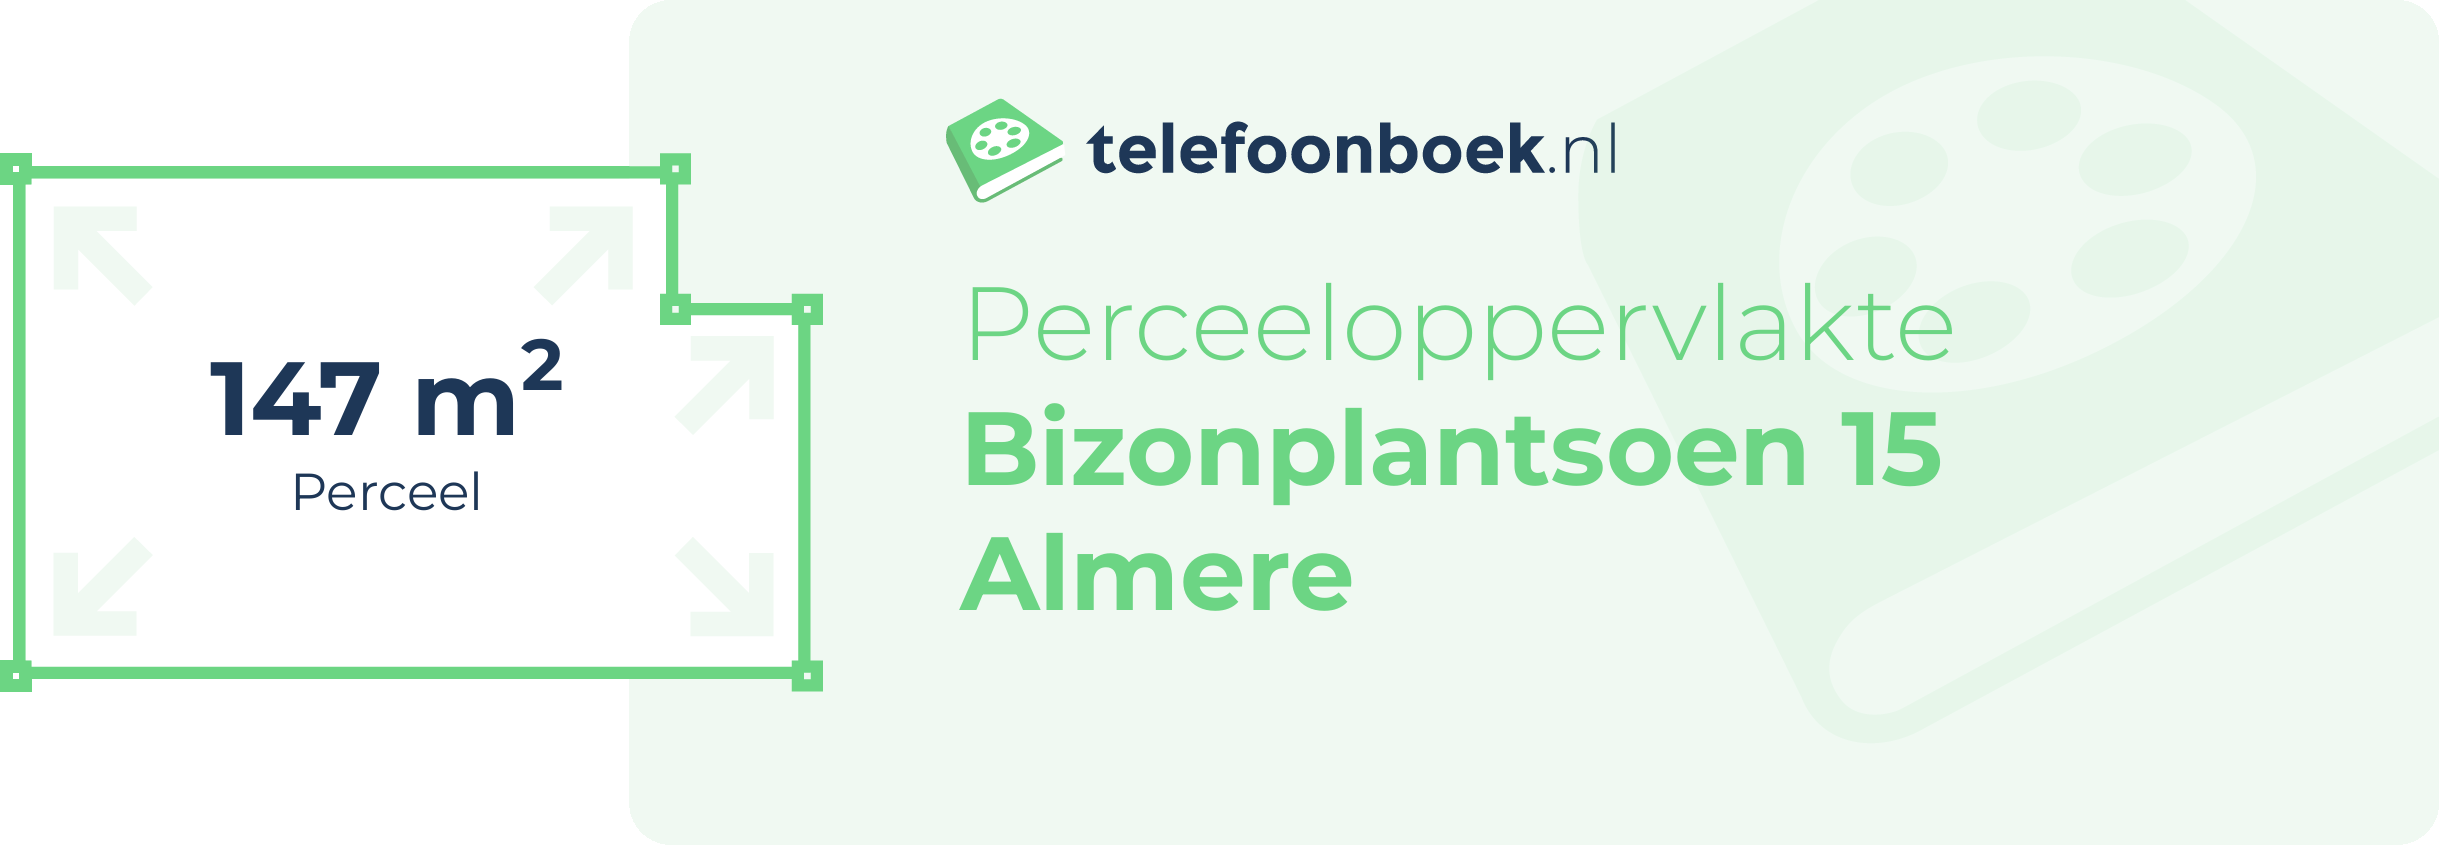 Perceeloppervlakte Bizonplantsoen 15 Almere